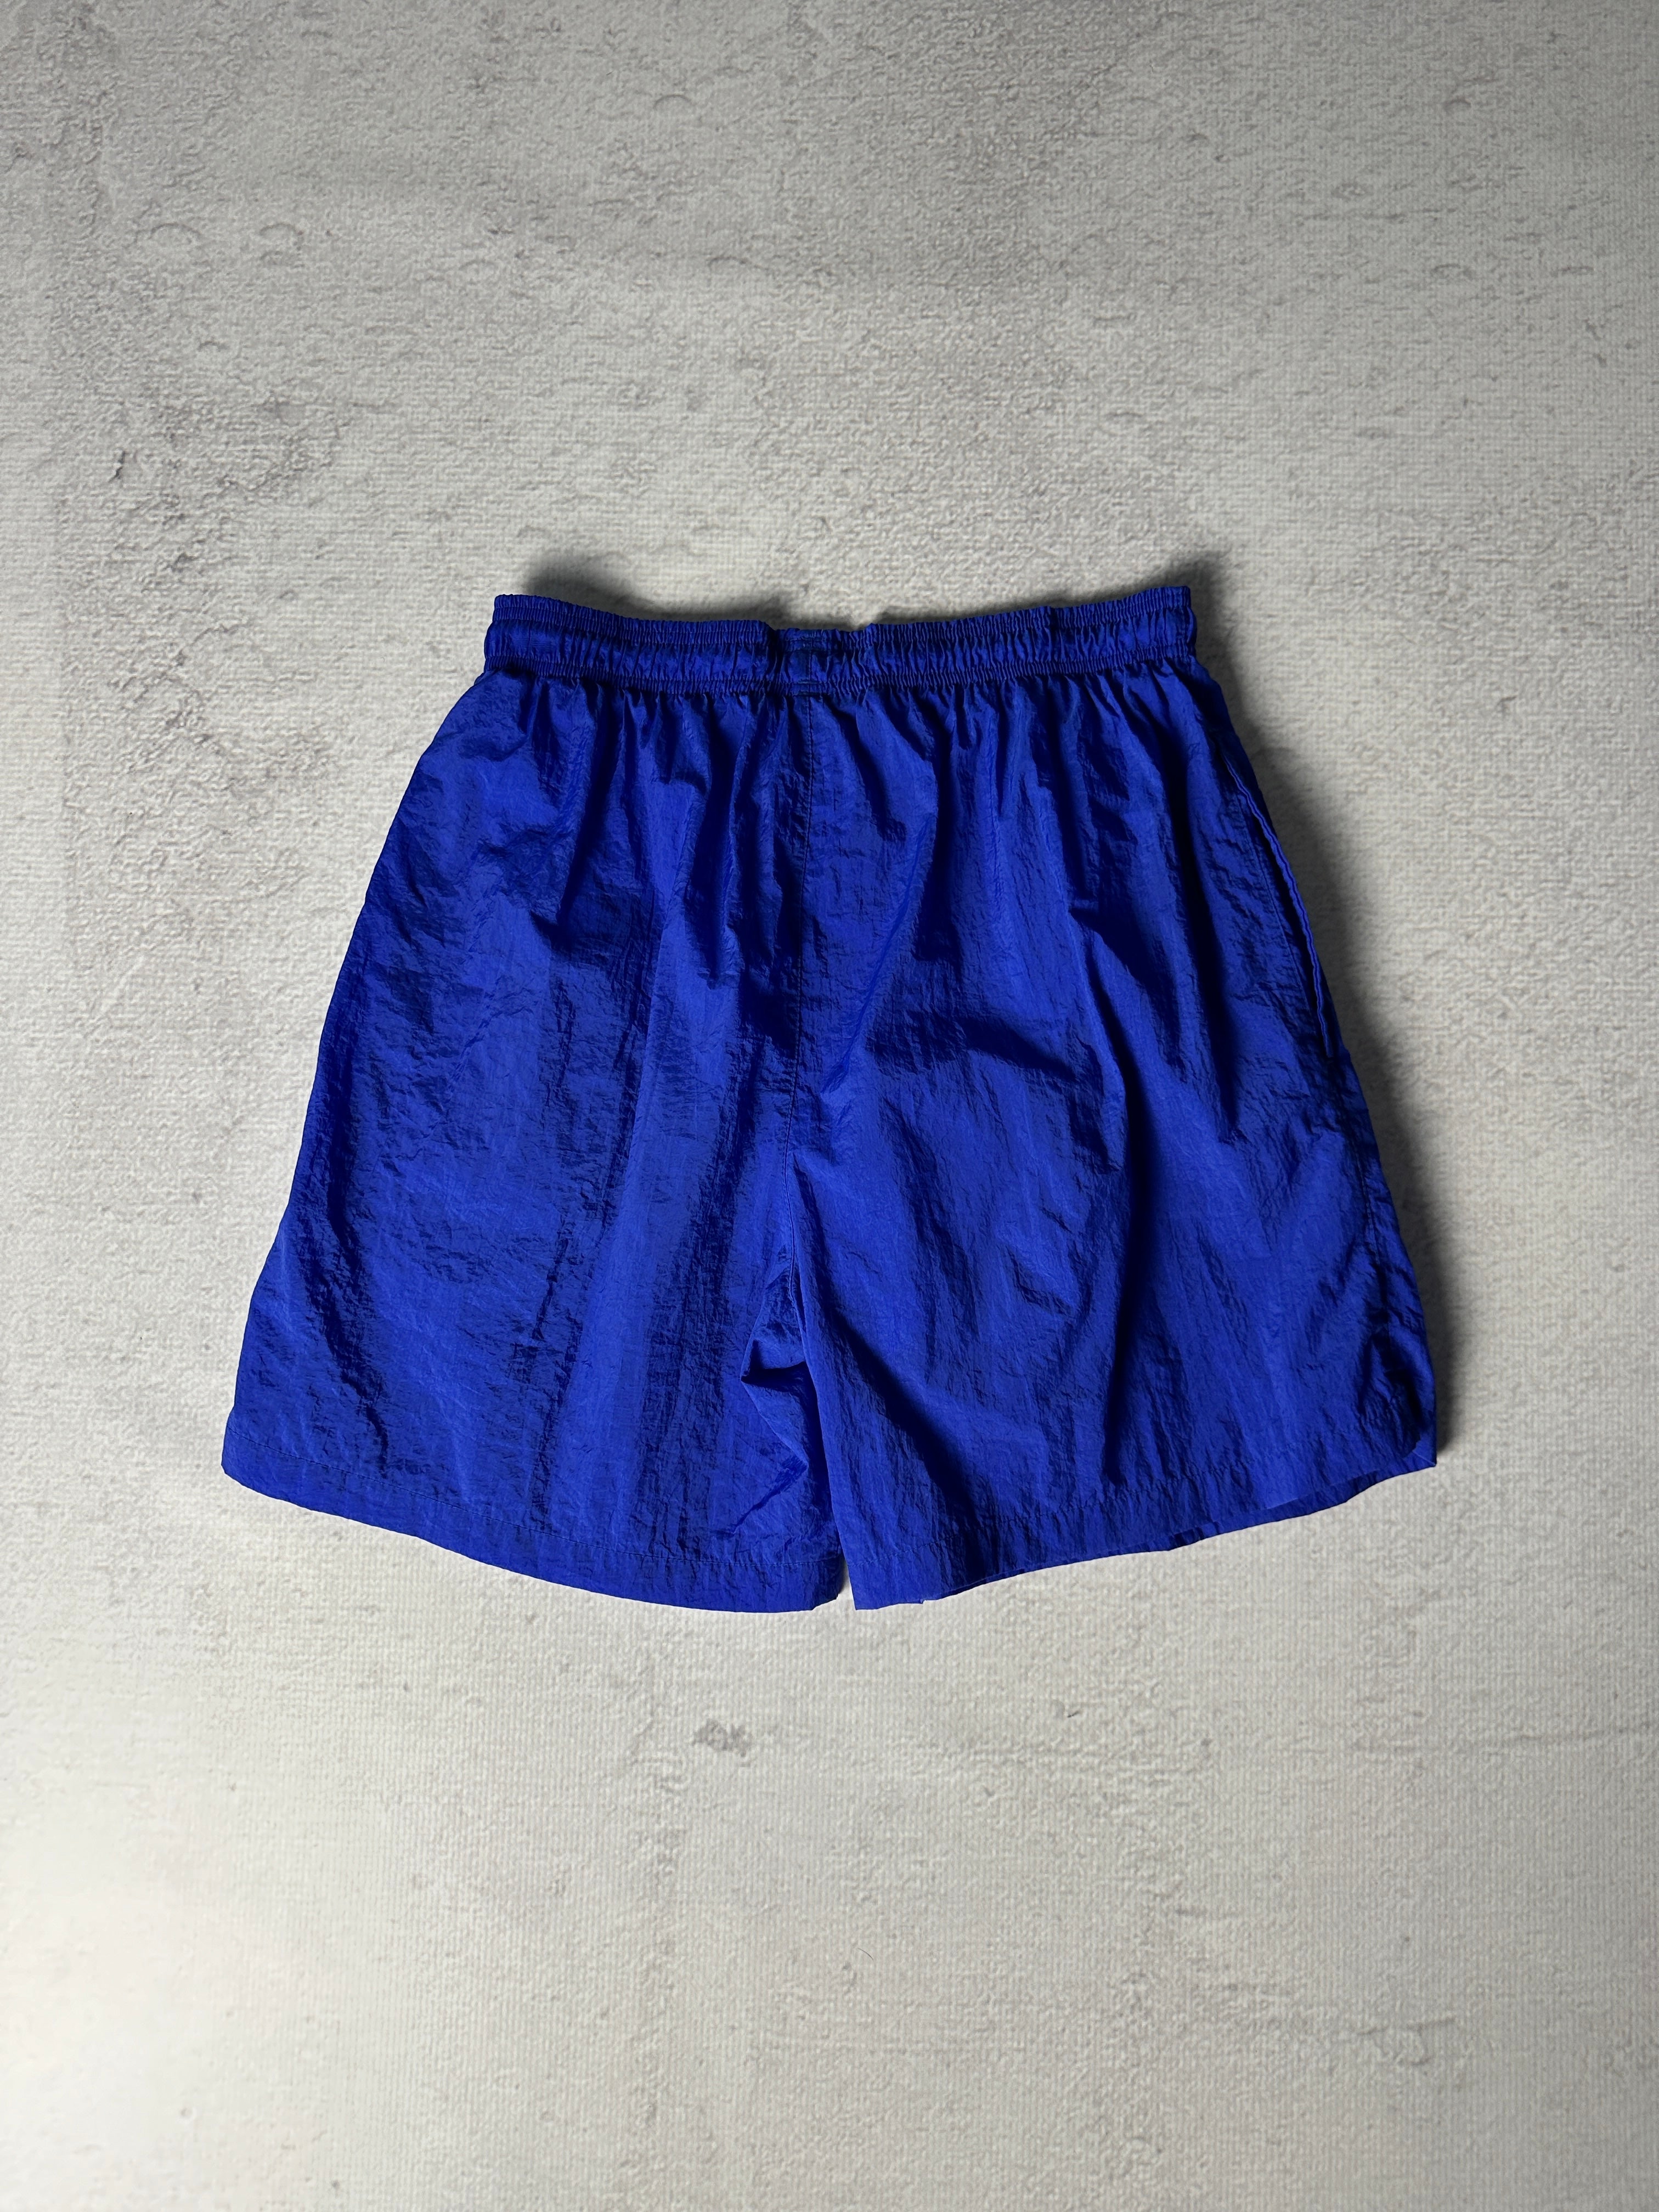 Vintage Adidas Track Shorts - Men's Small